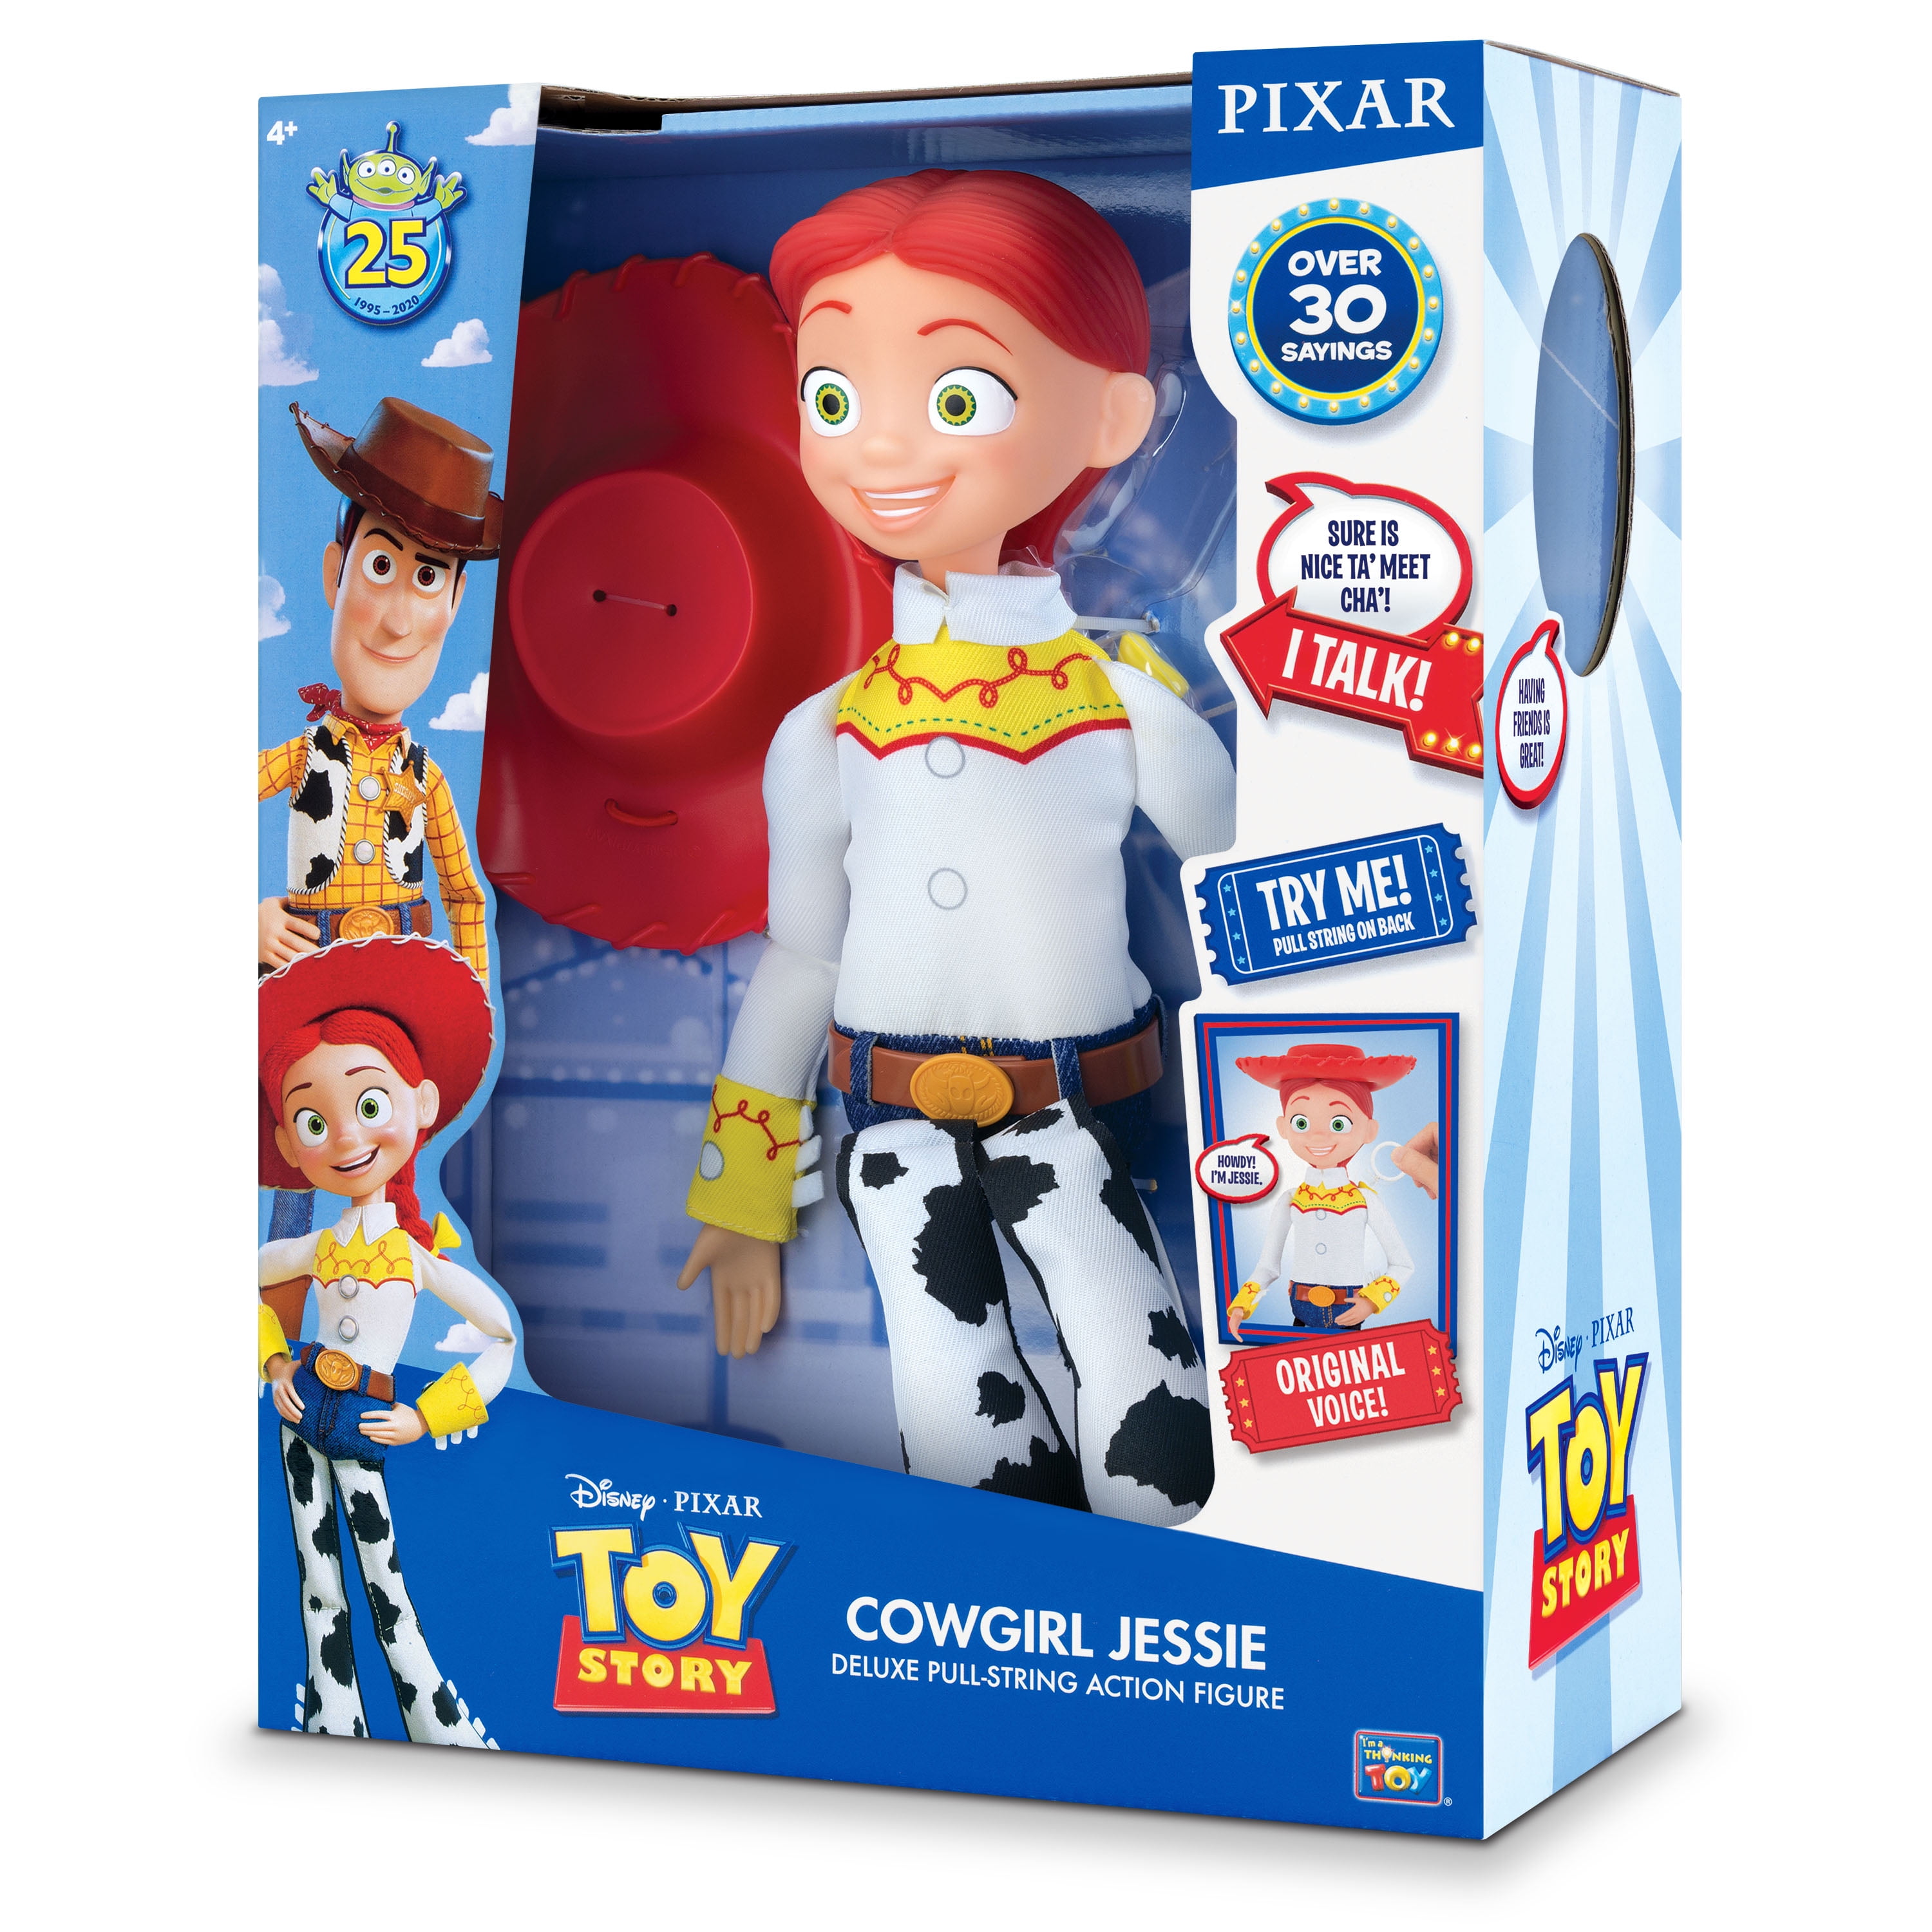 Original Voix Toy Story 4 Jessie Parlant Action Figurine Cowgirl Disney Pixar 